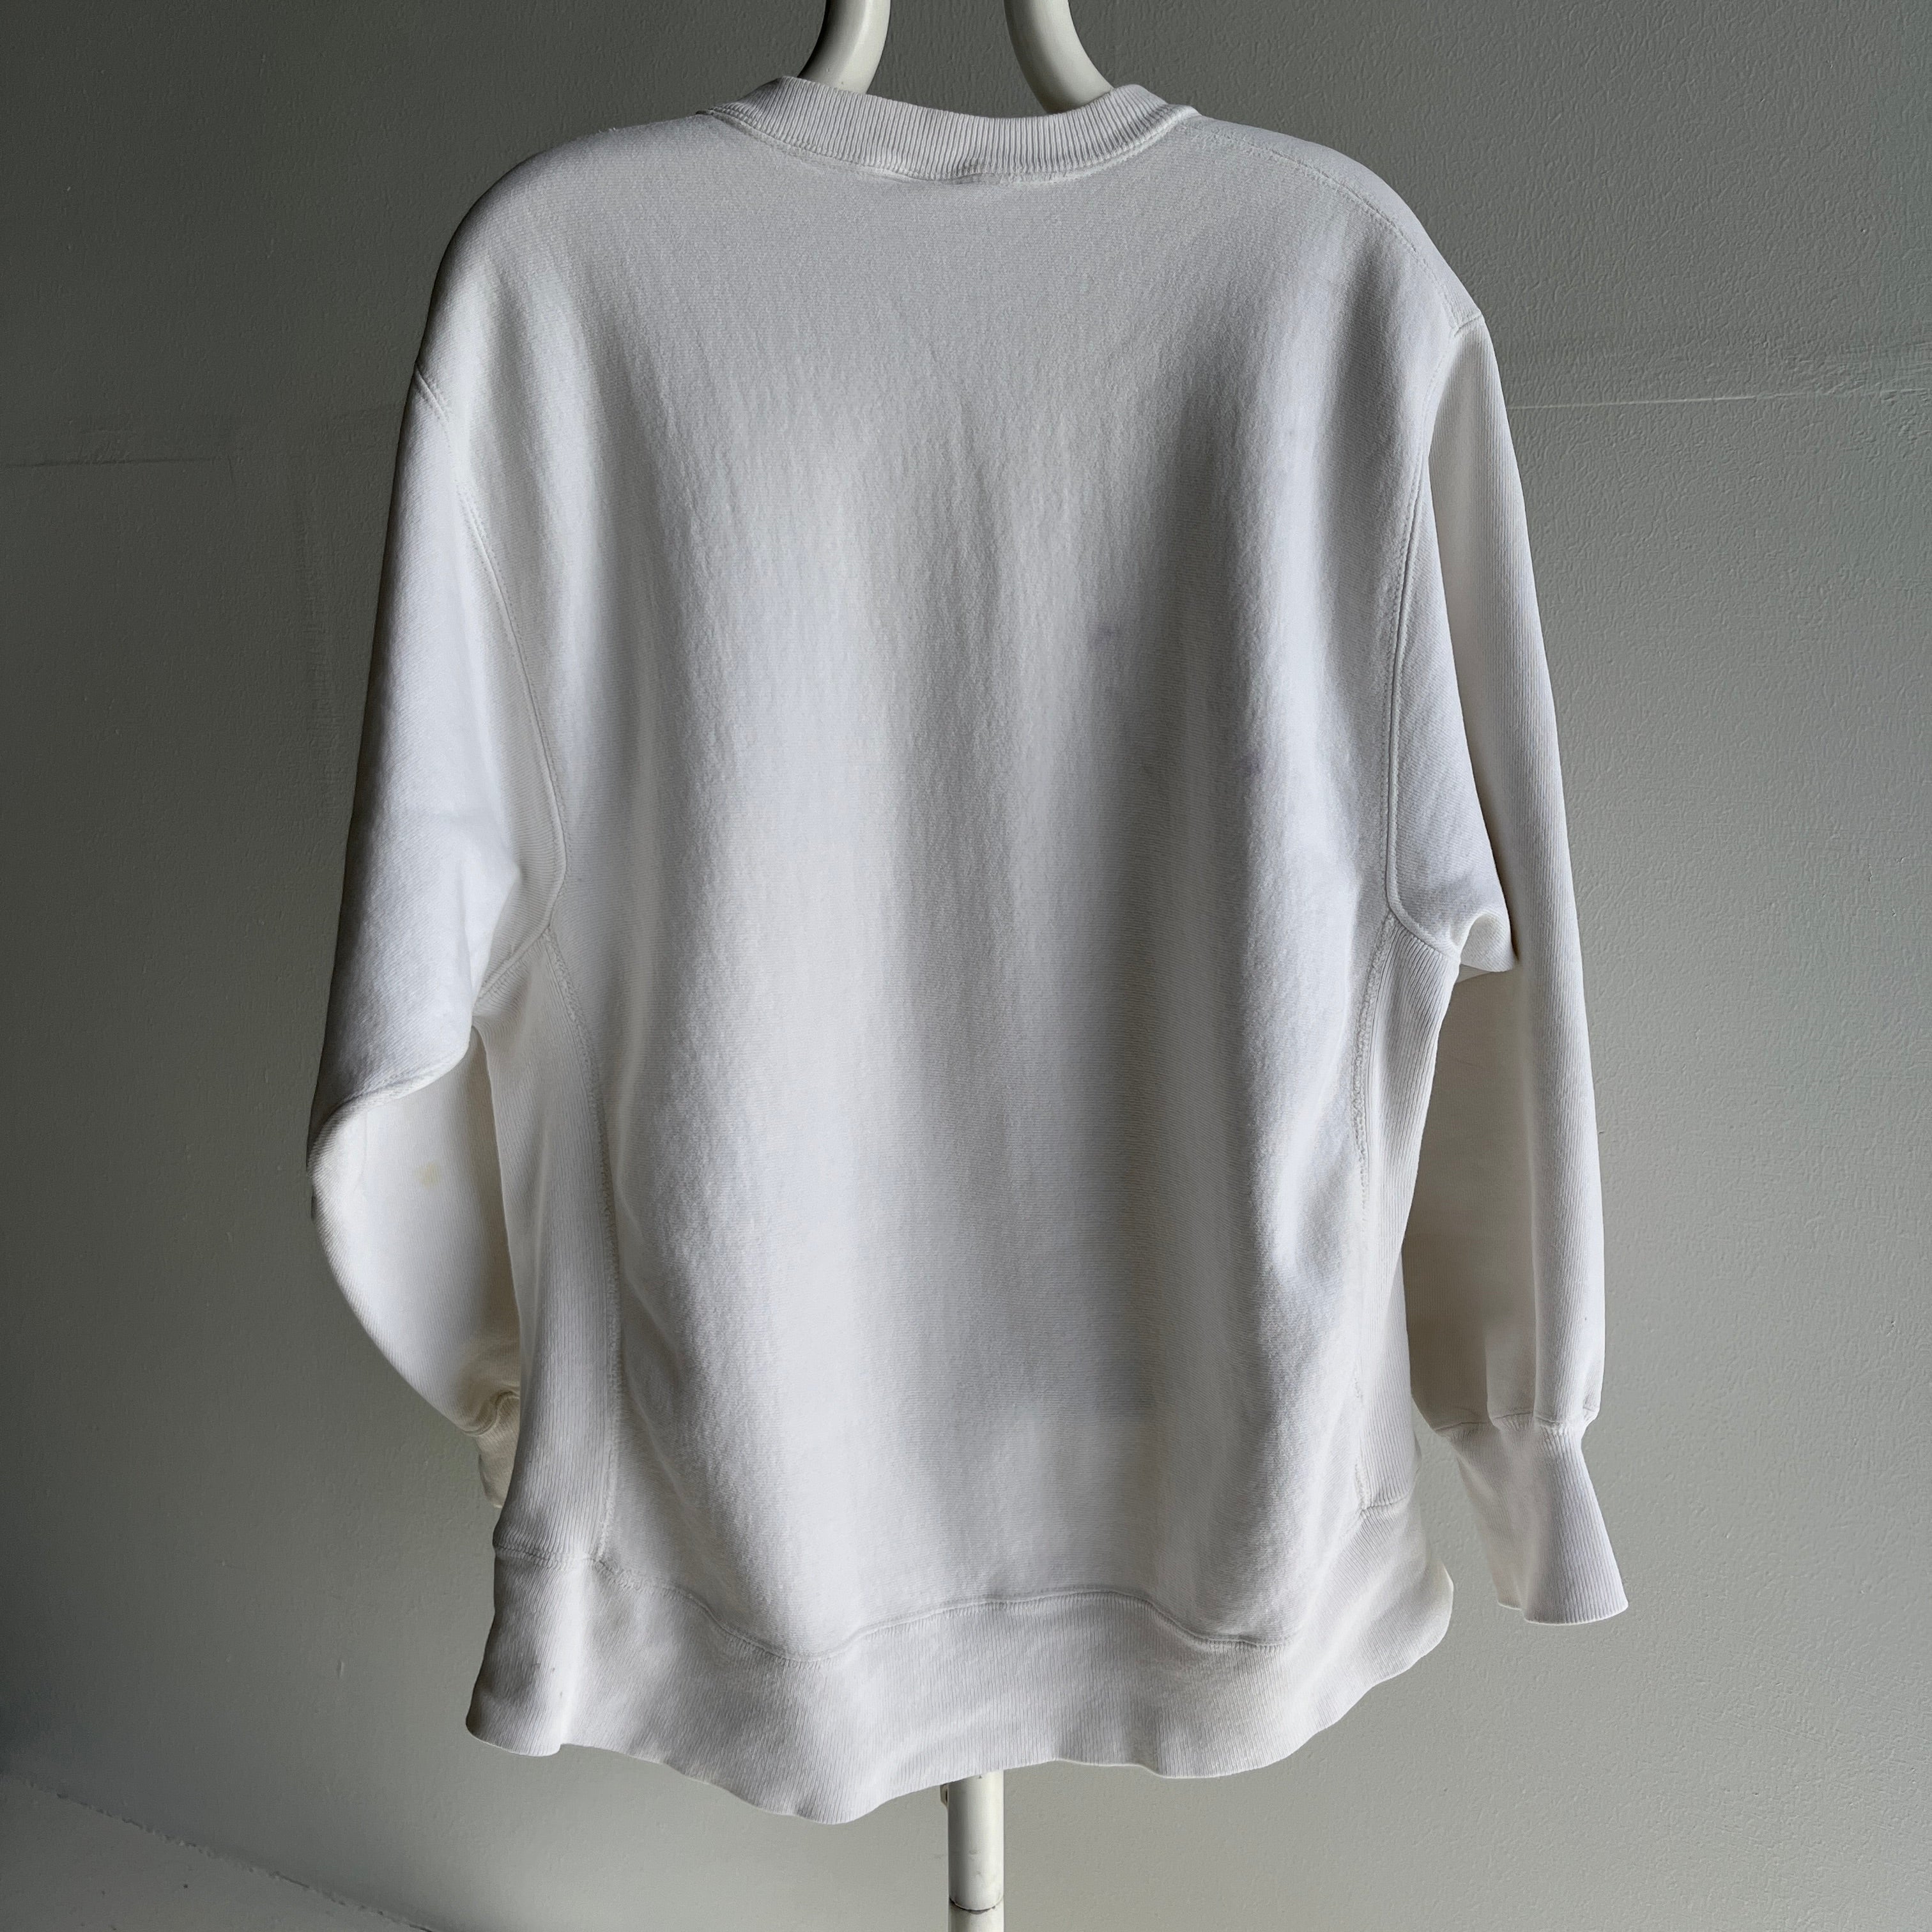 1980s Soft and Worn Heavyweight White Cotton Reverse Weave Sweatshirt